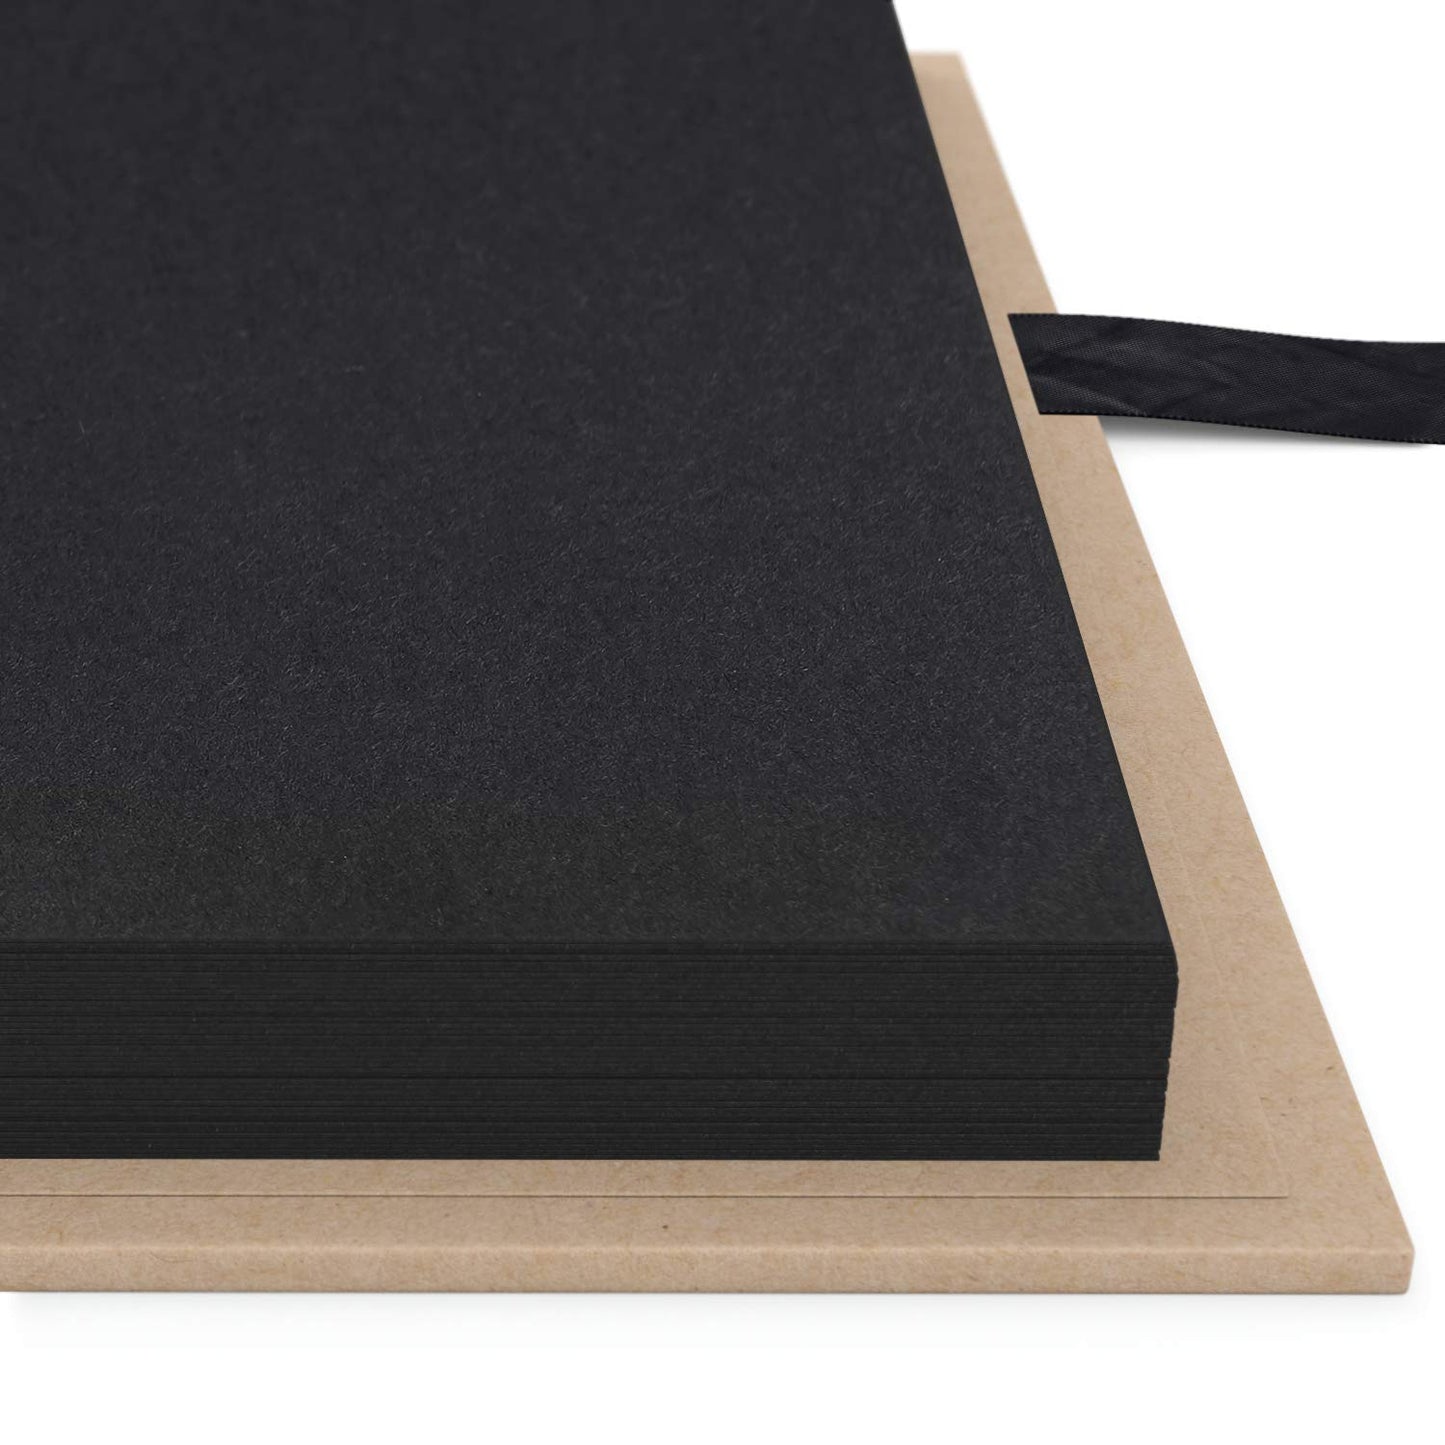 Arteza Spiral-Bound Scrapbook, Black Cover, 8.5" x 11", 40 Black Sheets - Pack of 3